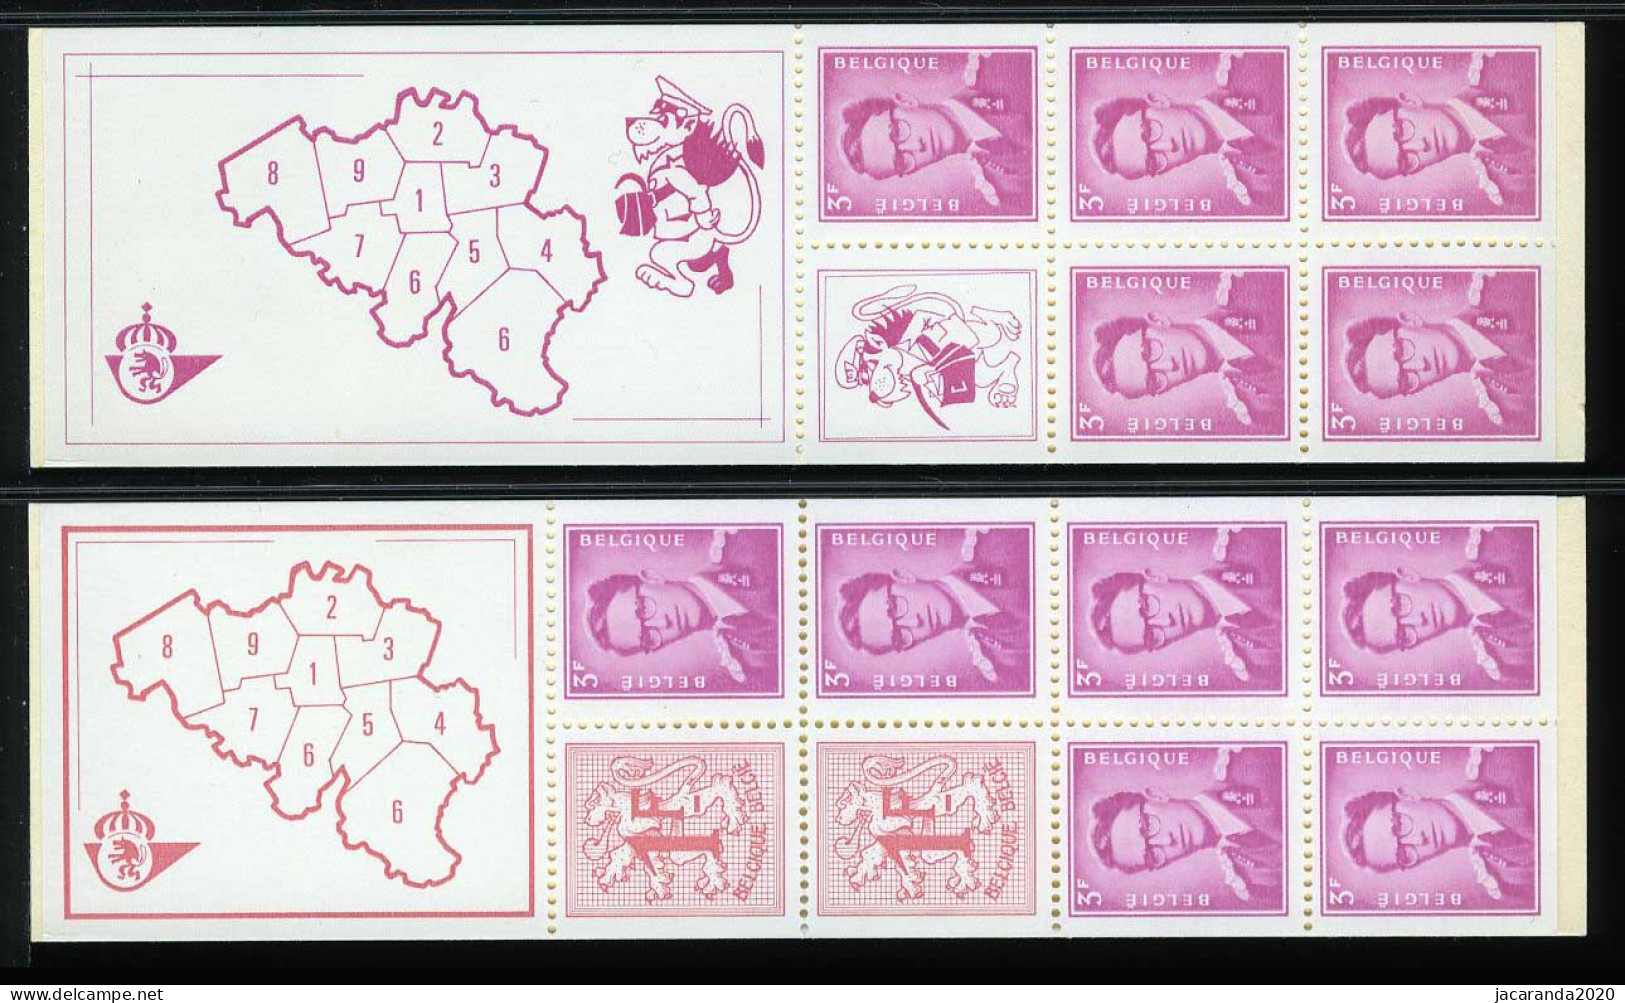 België B1/2 - Koning Boudewijn - Cijfer Op Heraldieke Leeuw - Roi Baudouin - Chiffre Sur Lion Héraldique - 1969 - 1953-2006 Modernes [B]